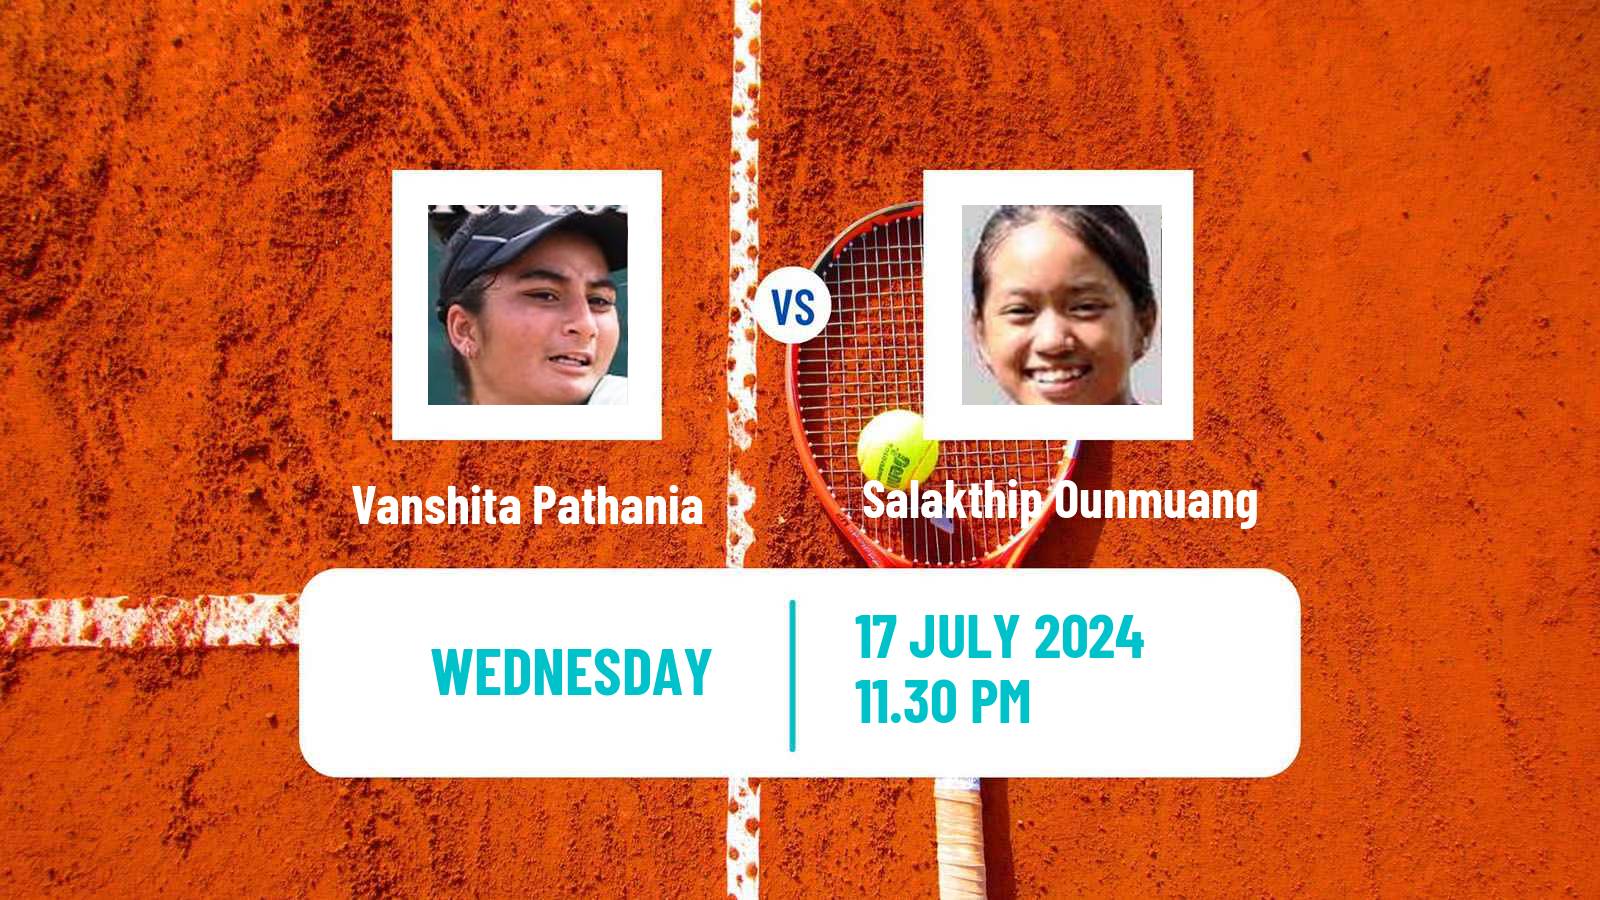 Tennis ITF W15 Nakhon Si Thammarat 4 Women Vanshita Pathania - Salakthip Ounmuang